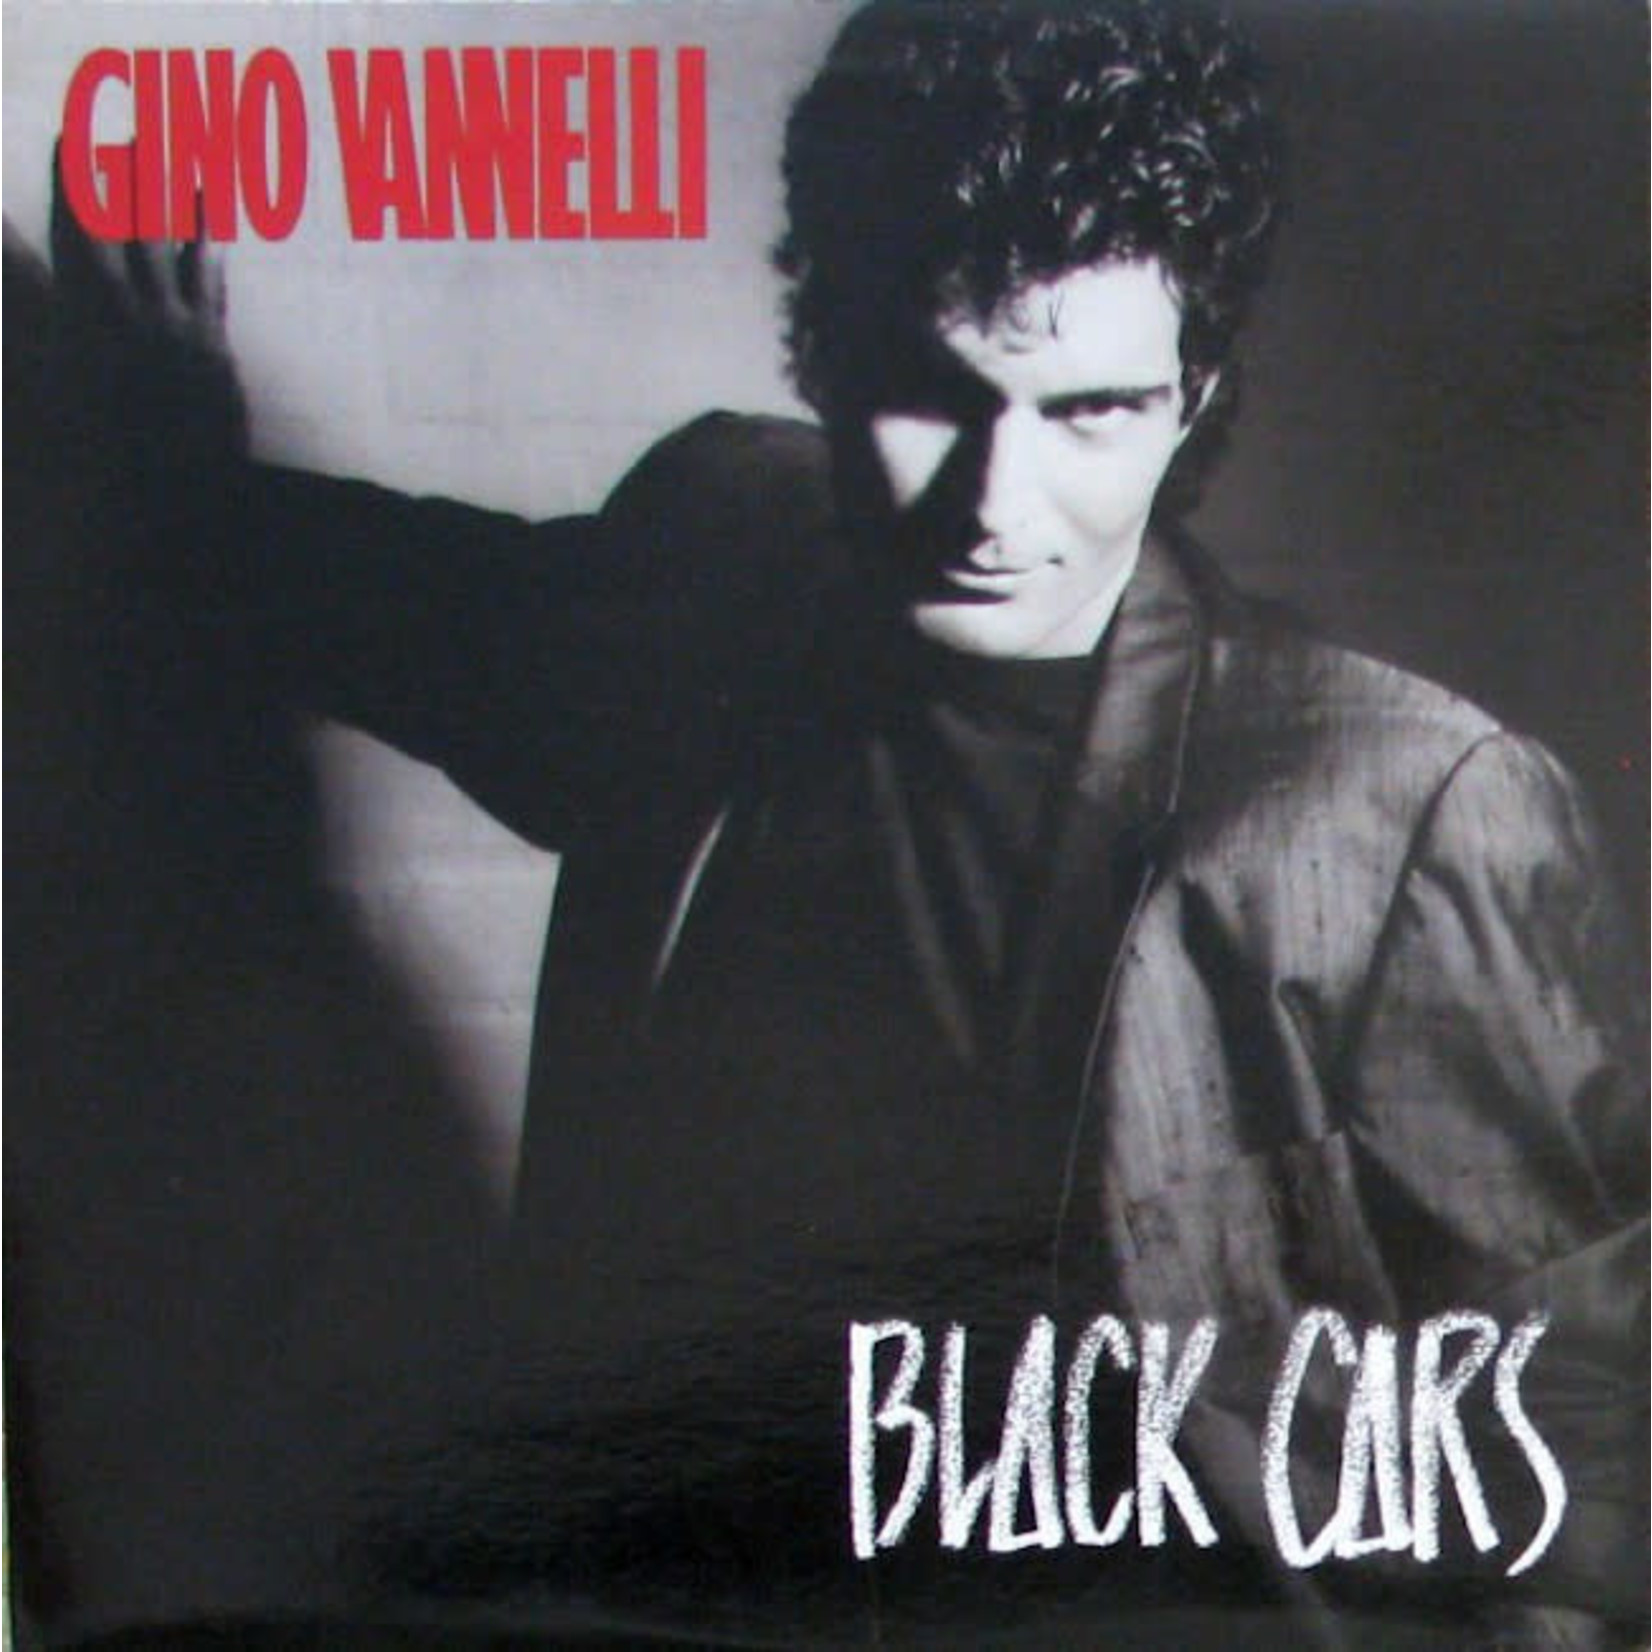 [Vintage] Gino Vannelli - Black Cars